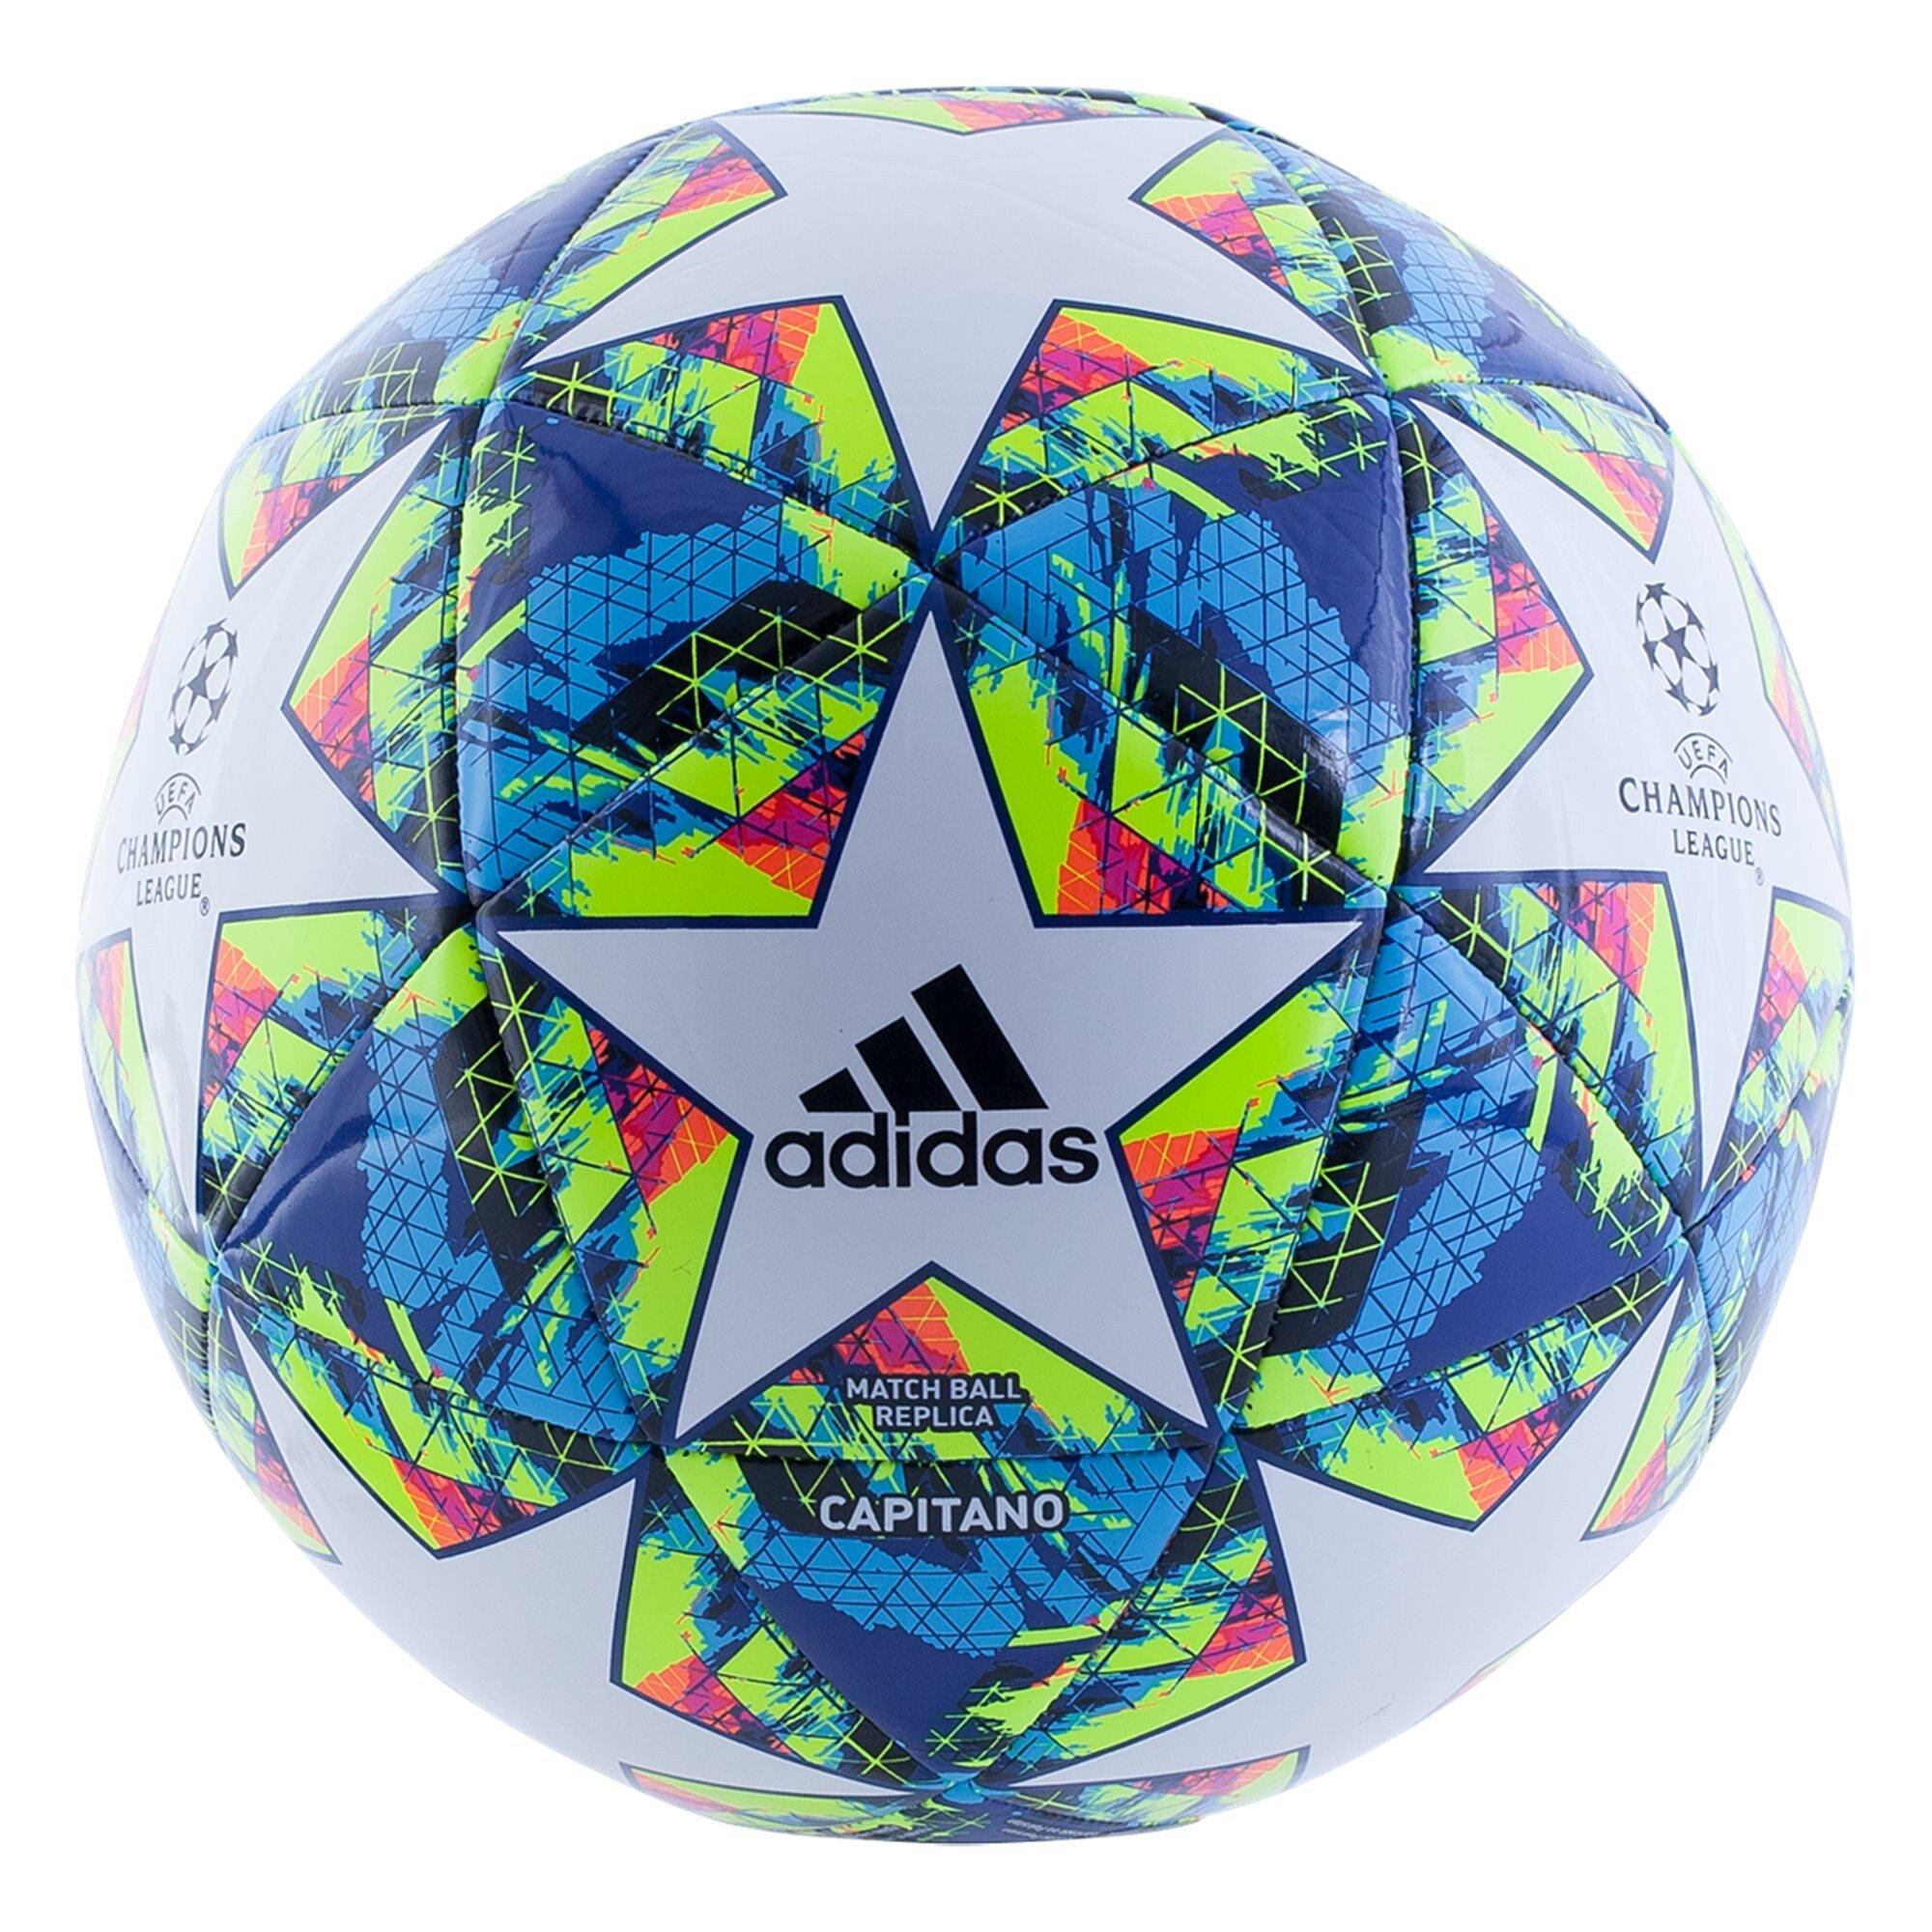 adidas soccer ball 5